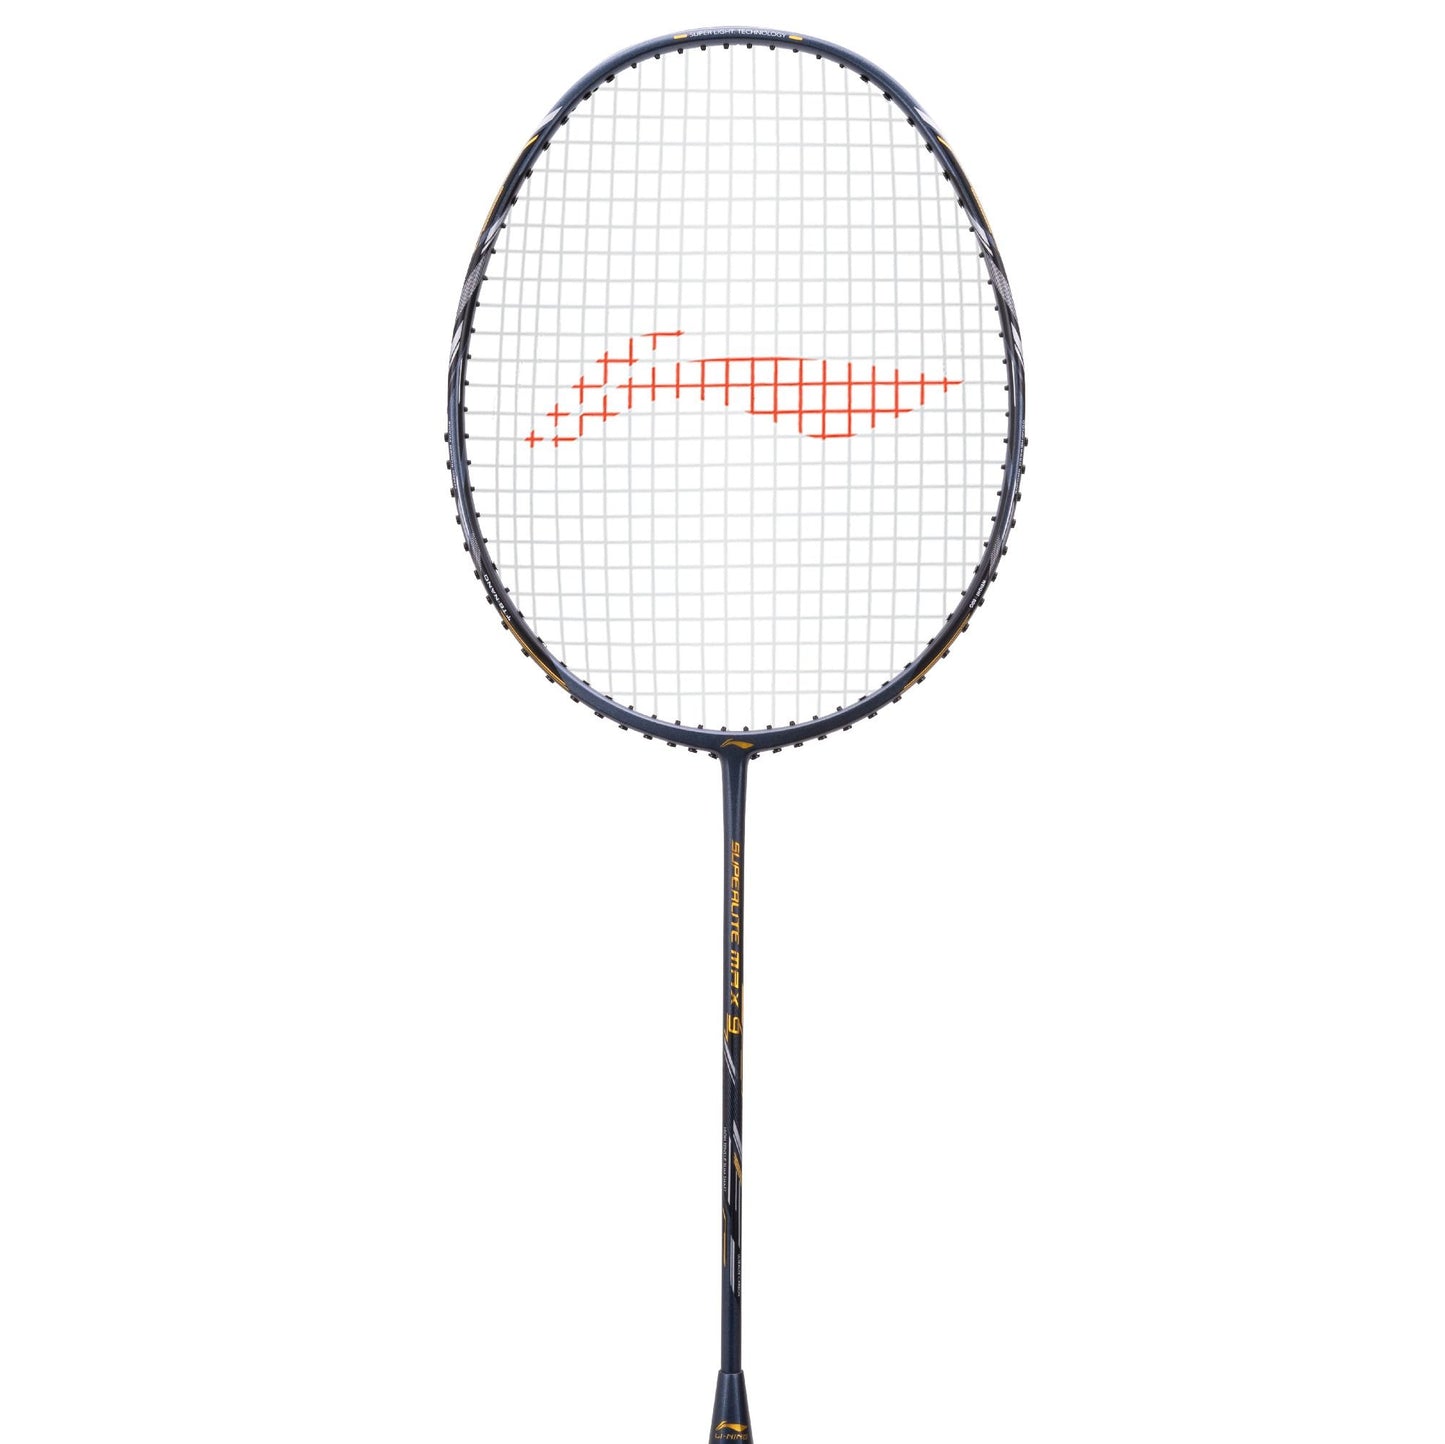 Li-Ning G-Force Superlite Max 9 (Black/Dark Grey) Badminton Racket